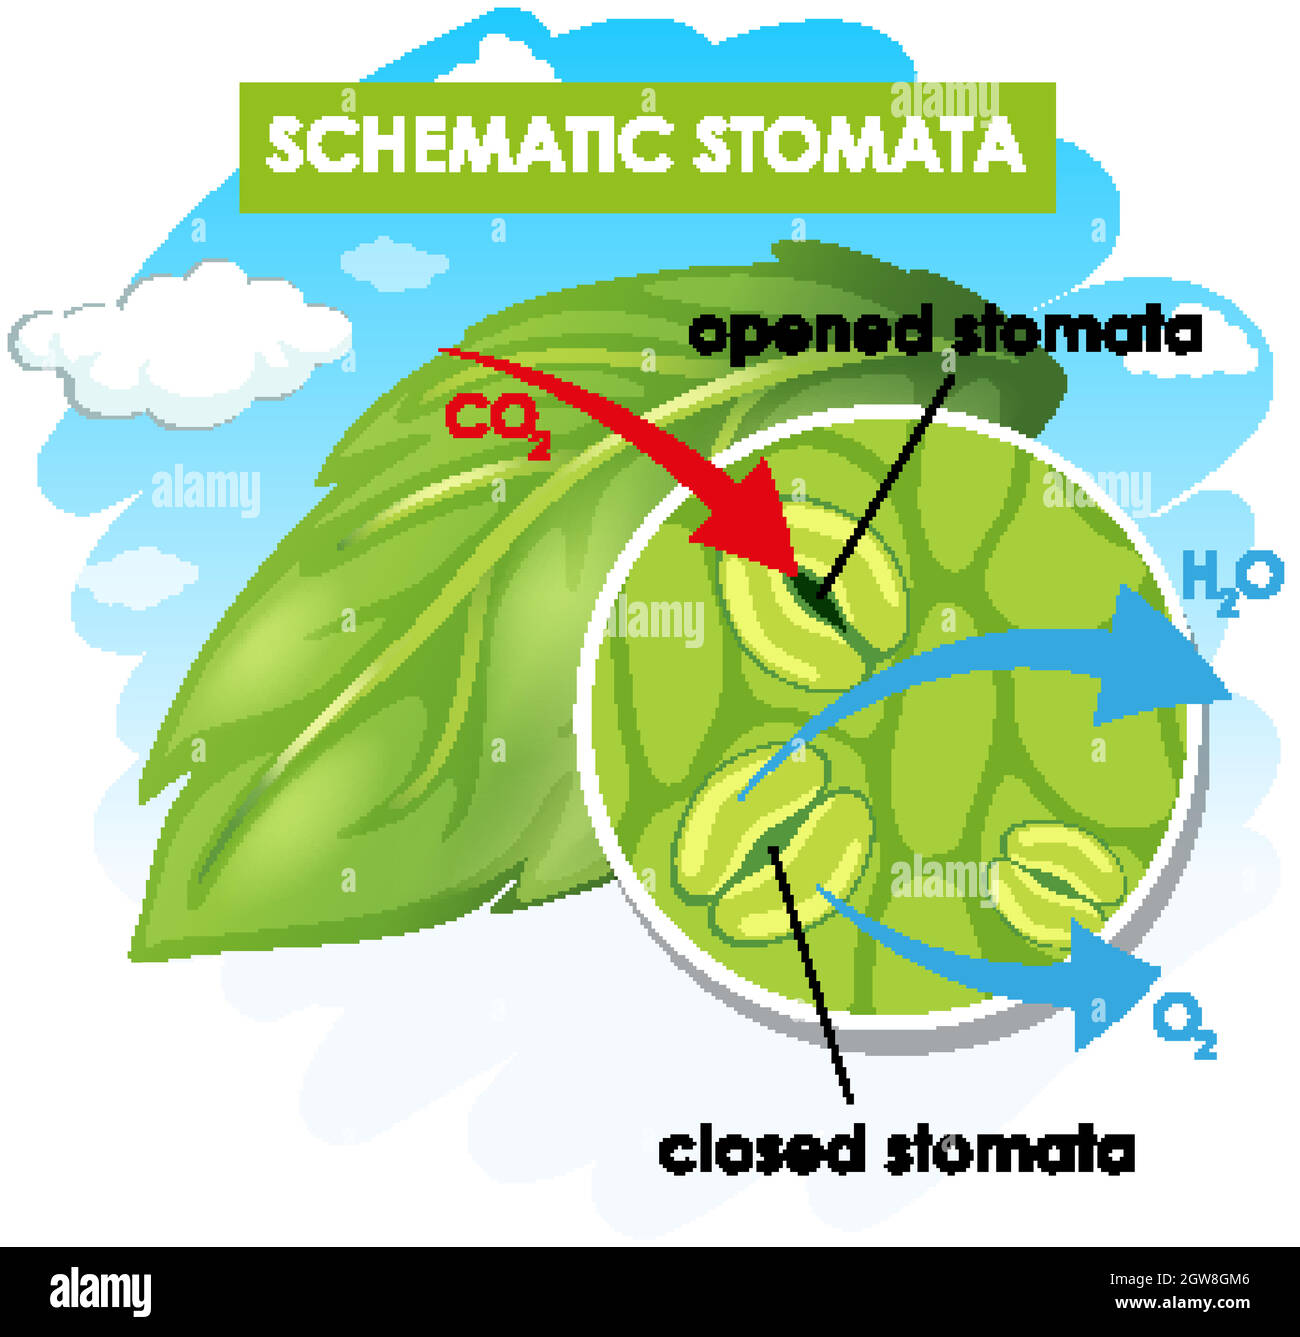 Diagram showing schematic stomata Stock Vector